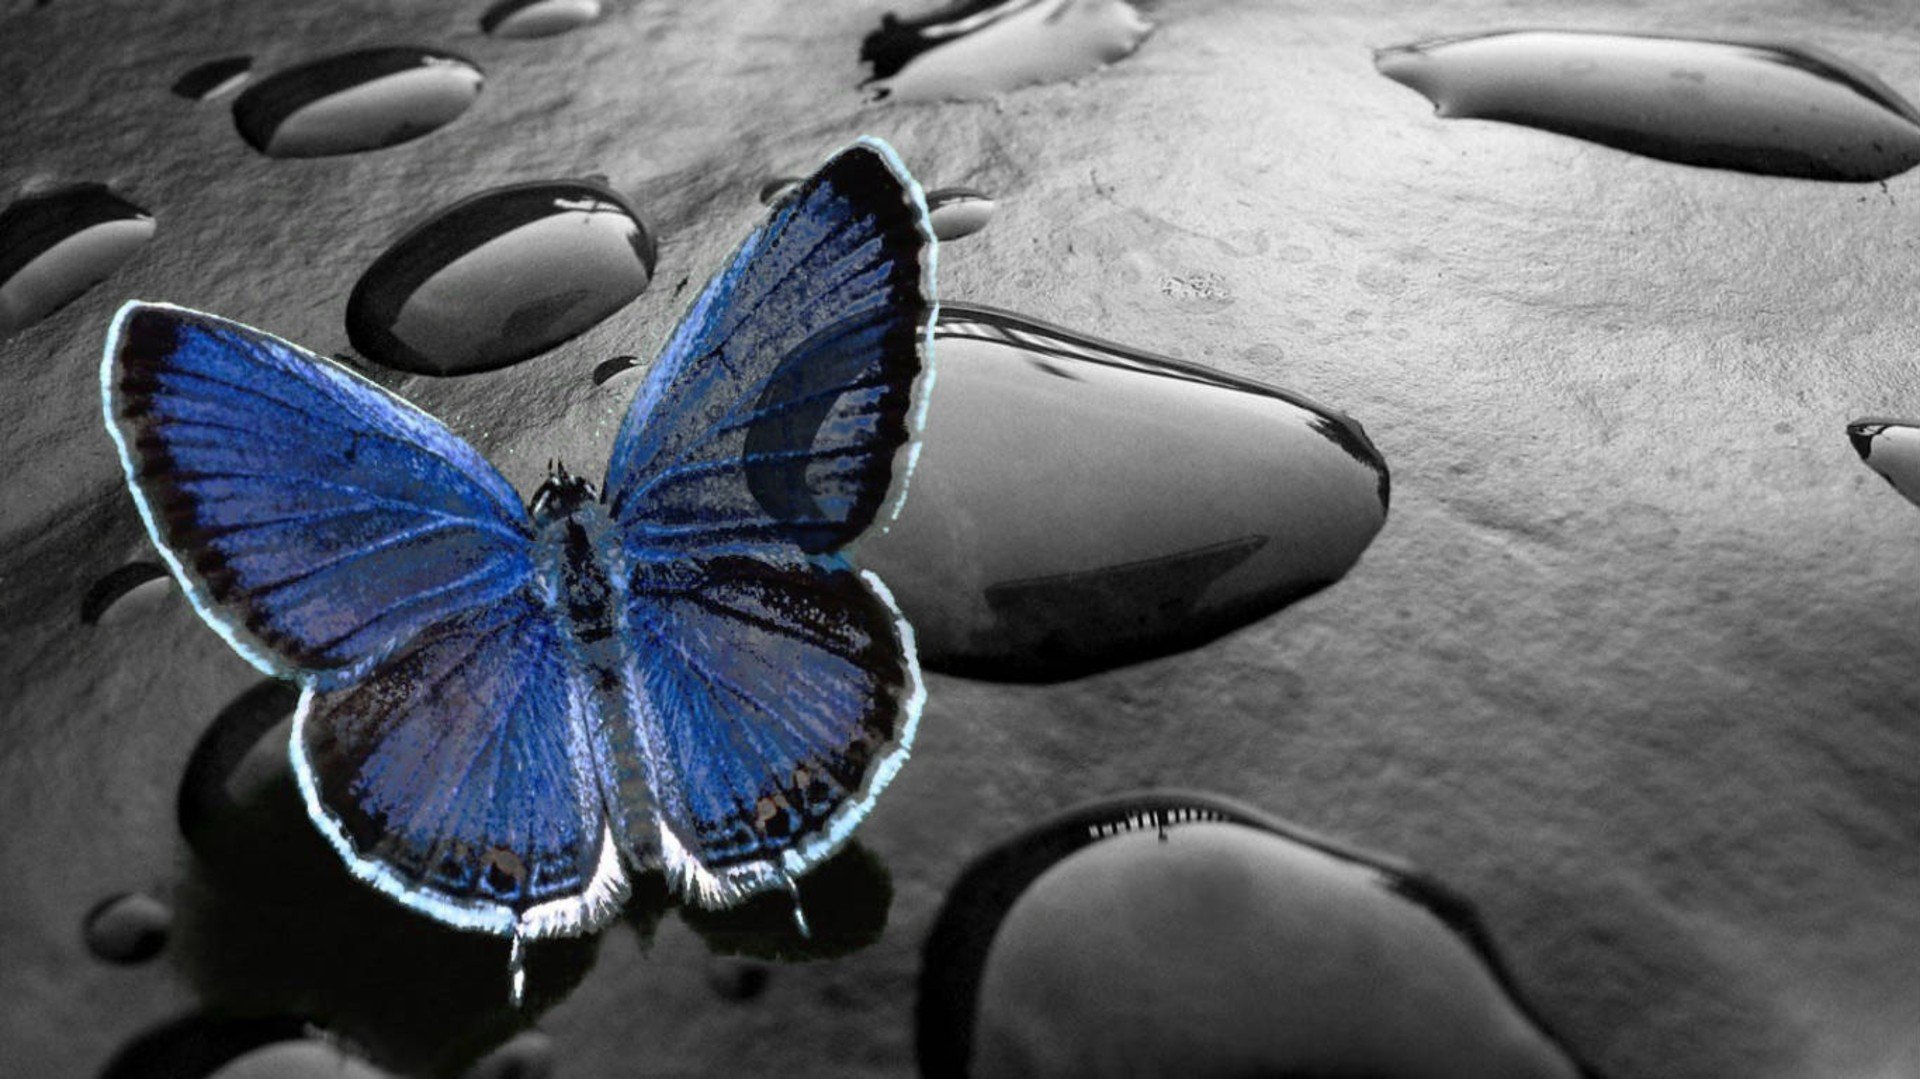 Обои на экран необычное. Картинки на рабочий стол бабочки. Заставка на телефон бабочки. Синяя бабочка. Необычные обои.